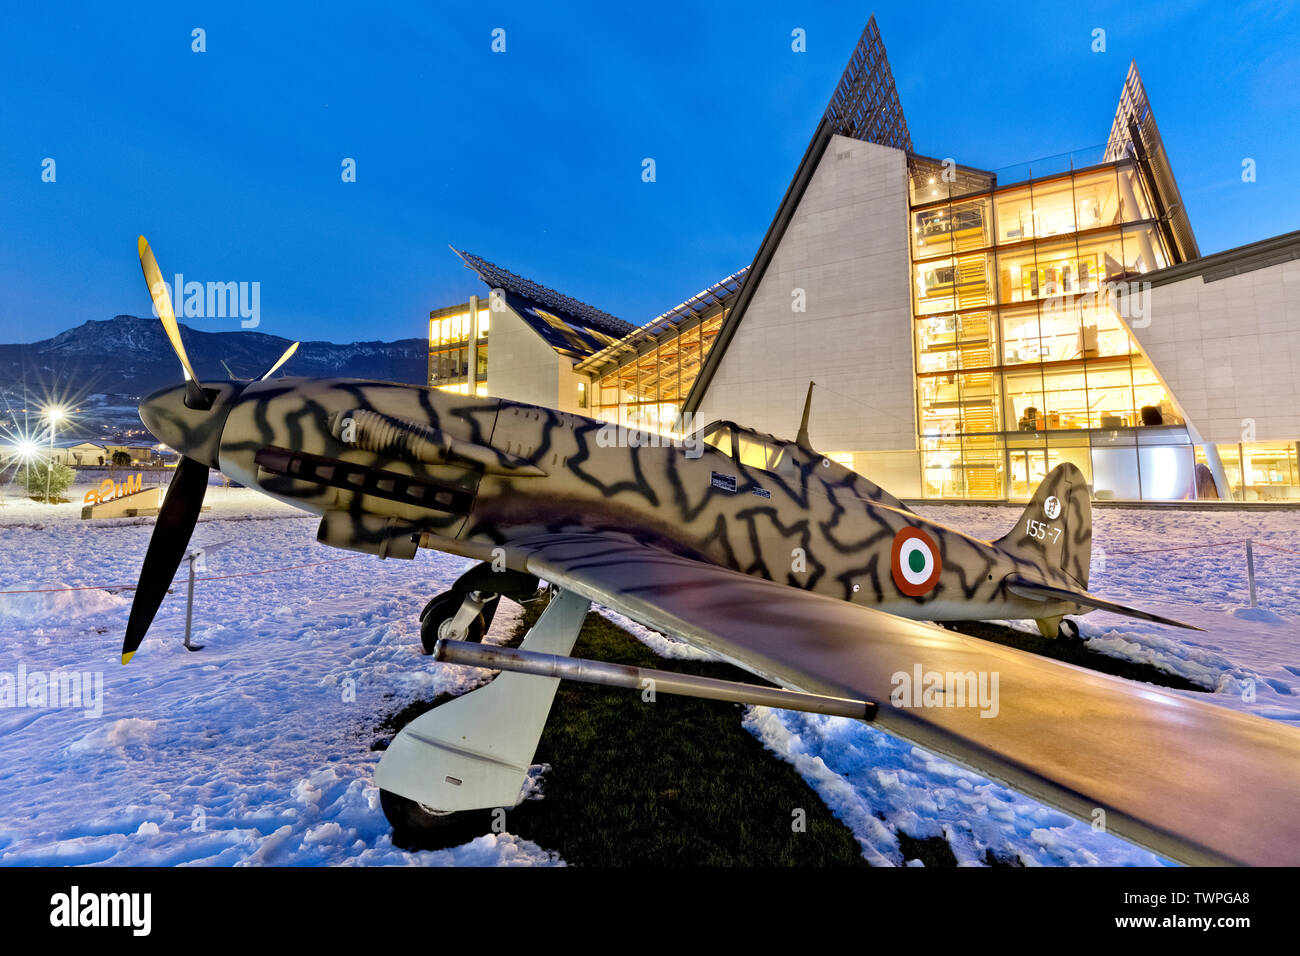 Die Aermacchi 205 Flugzeug und das Science Museum MUSE in Trient. Trentino Alto-Adige, Italien, Europa. Stockfoto